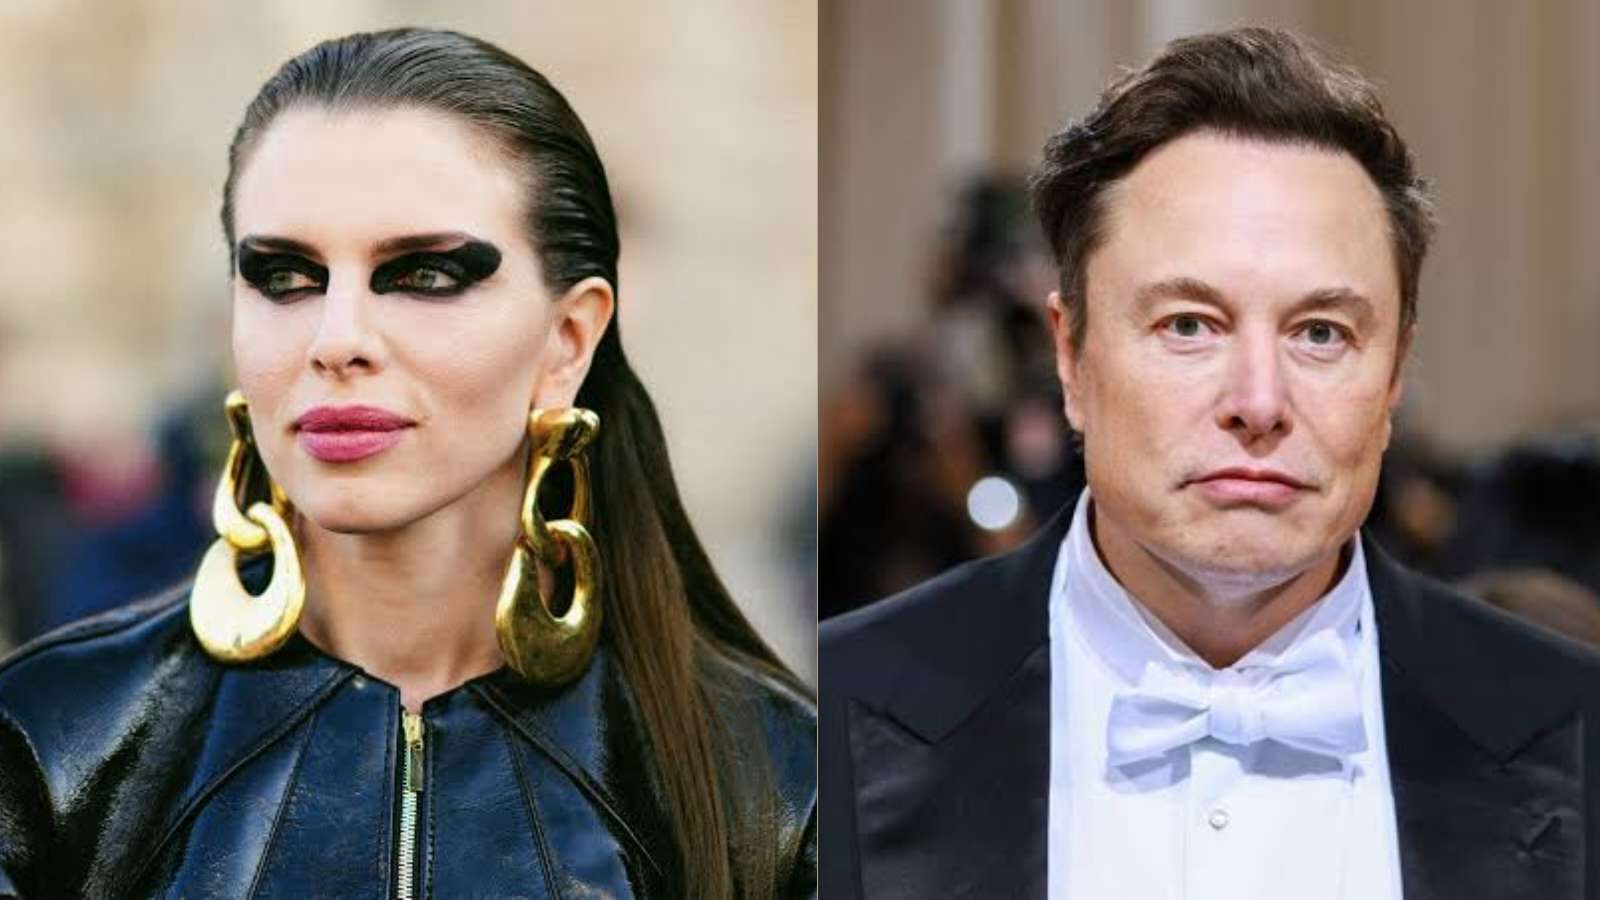 Julia Fox and Elon Musk